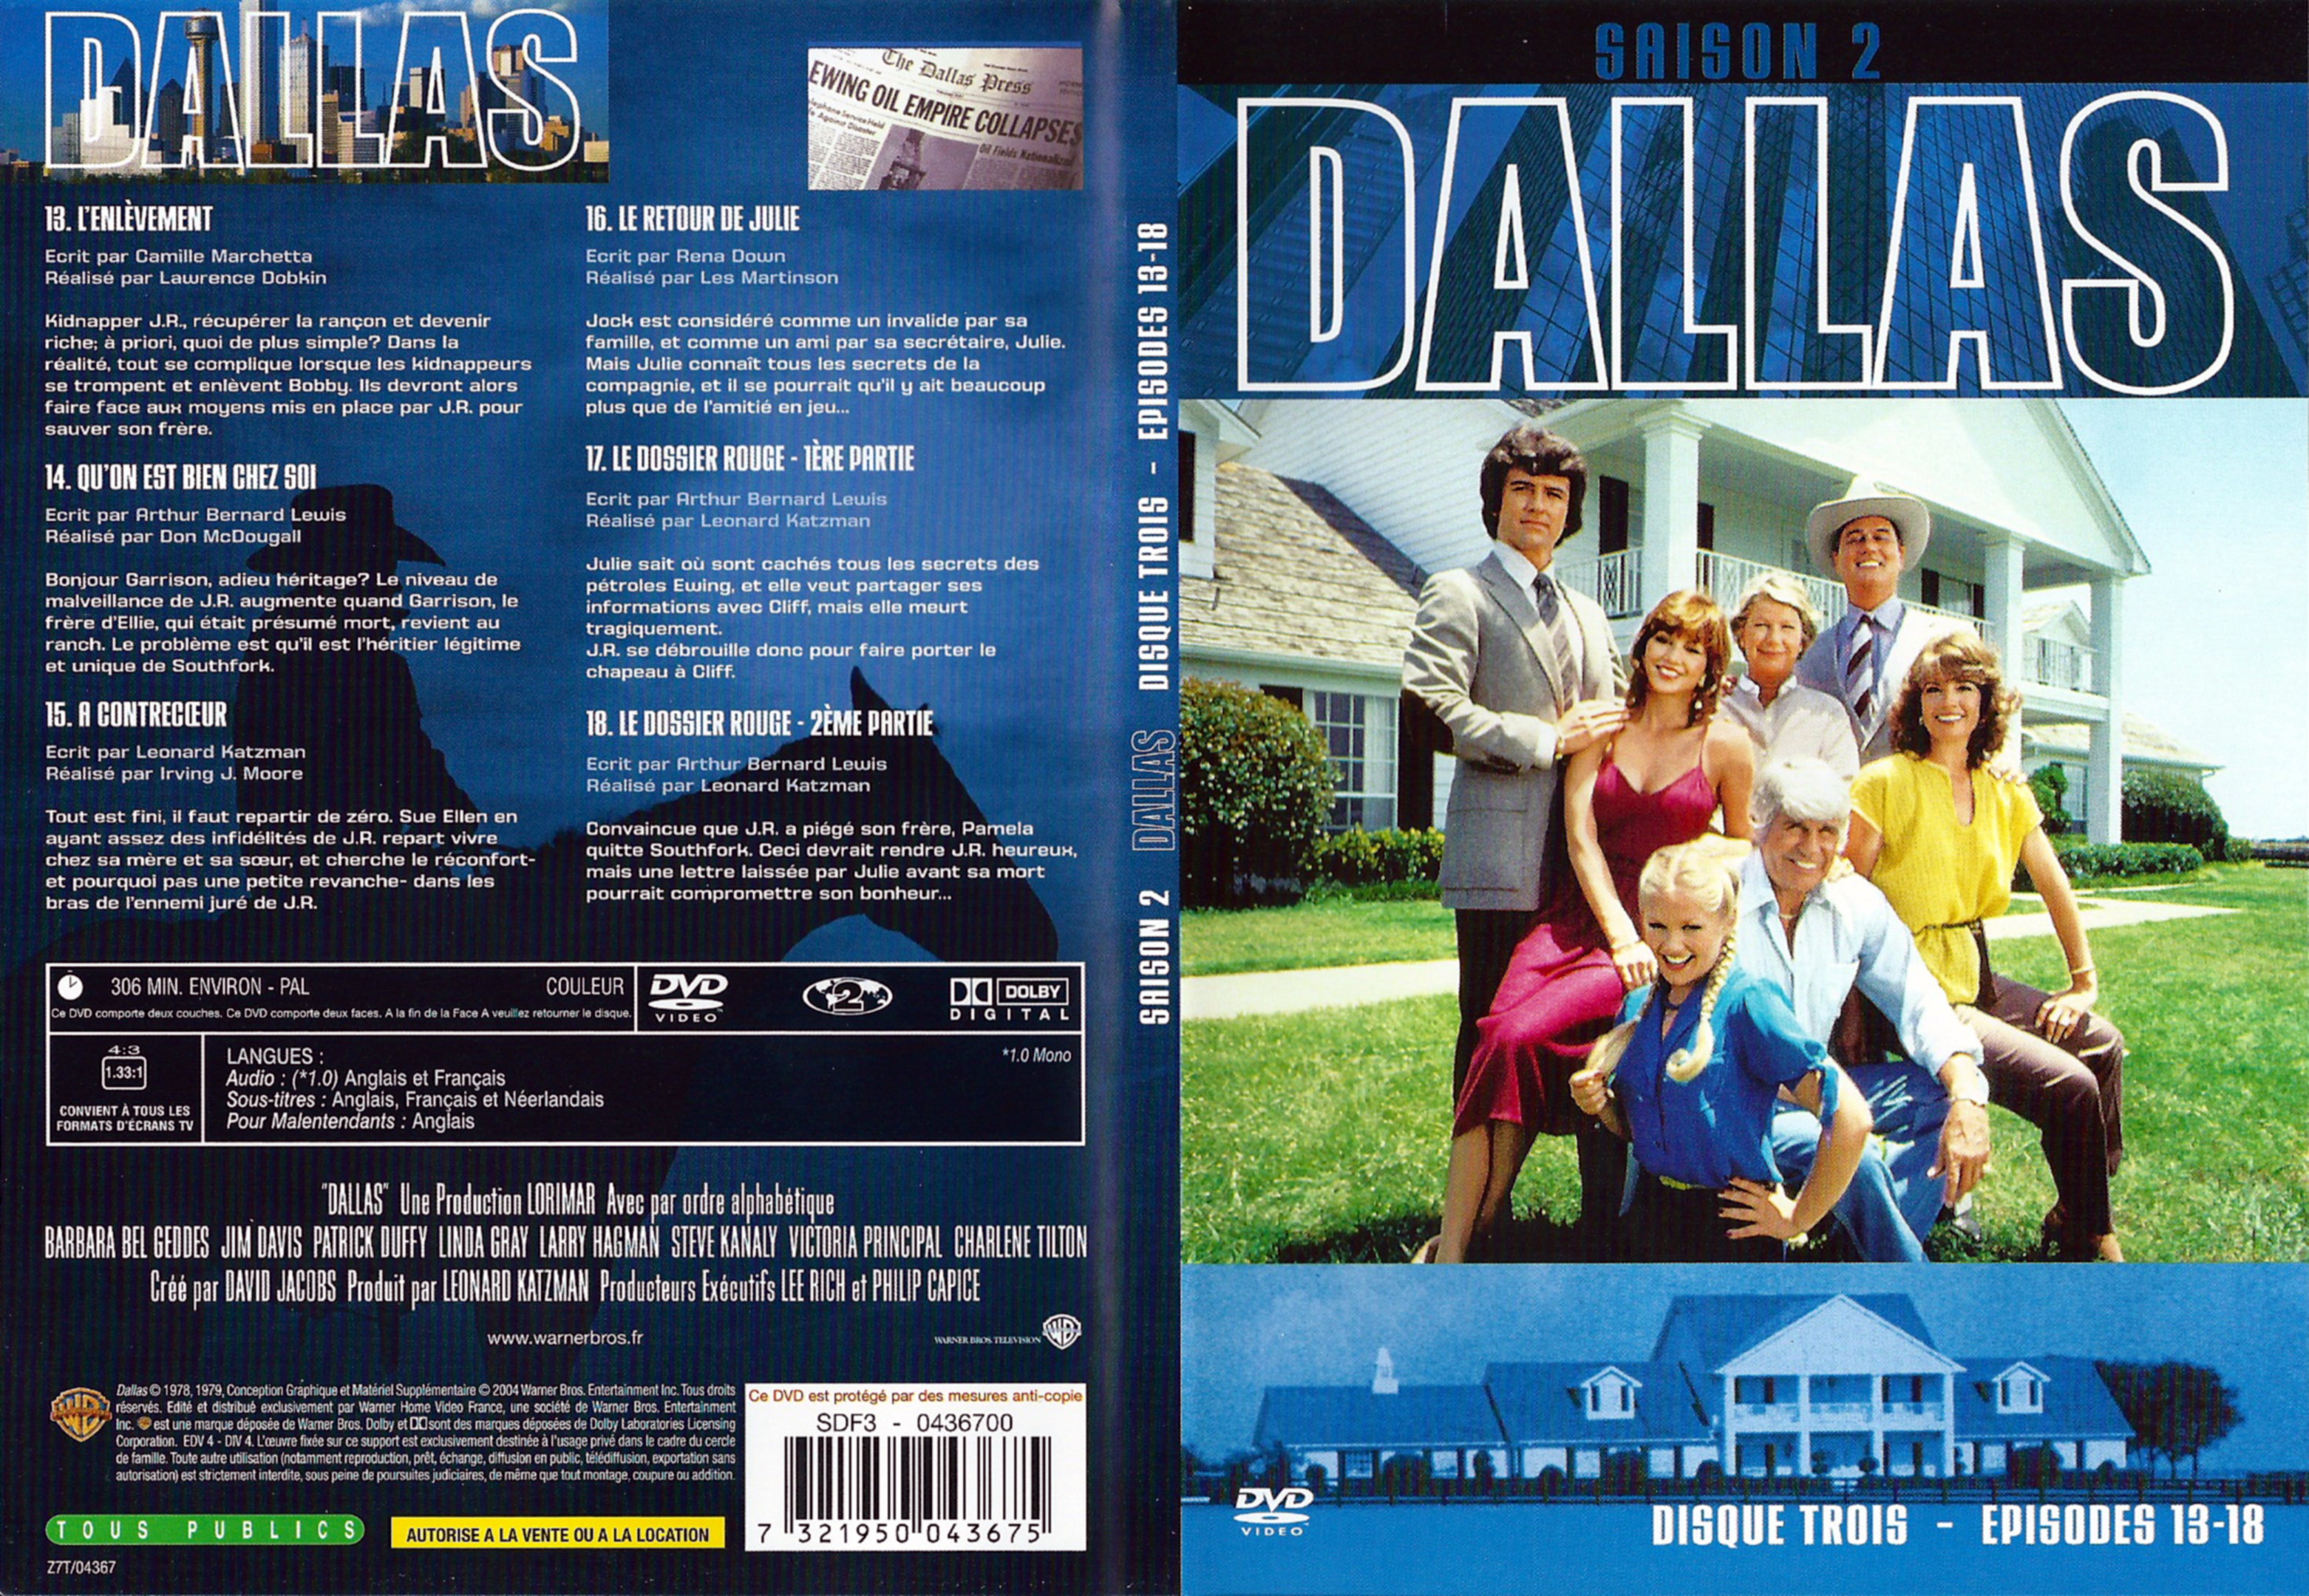 Jaquette DVD Dallas Saison 2 DVD 3